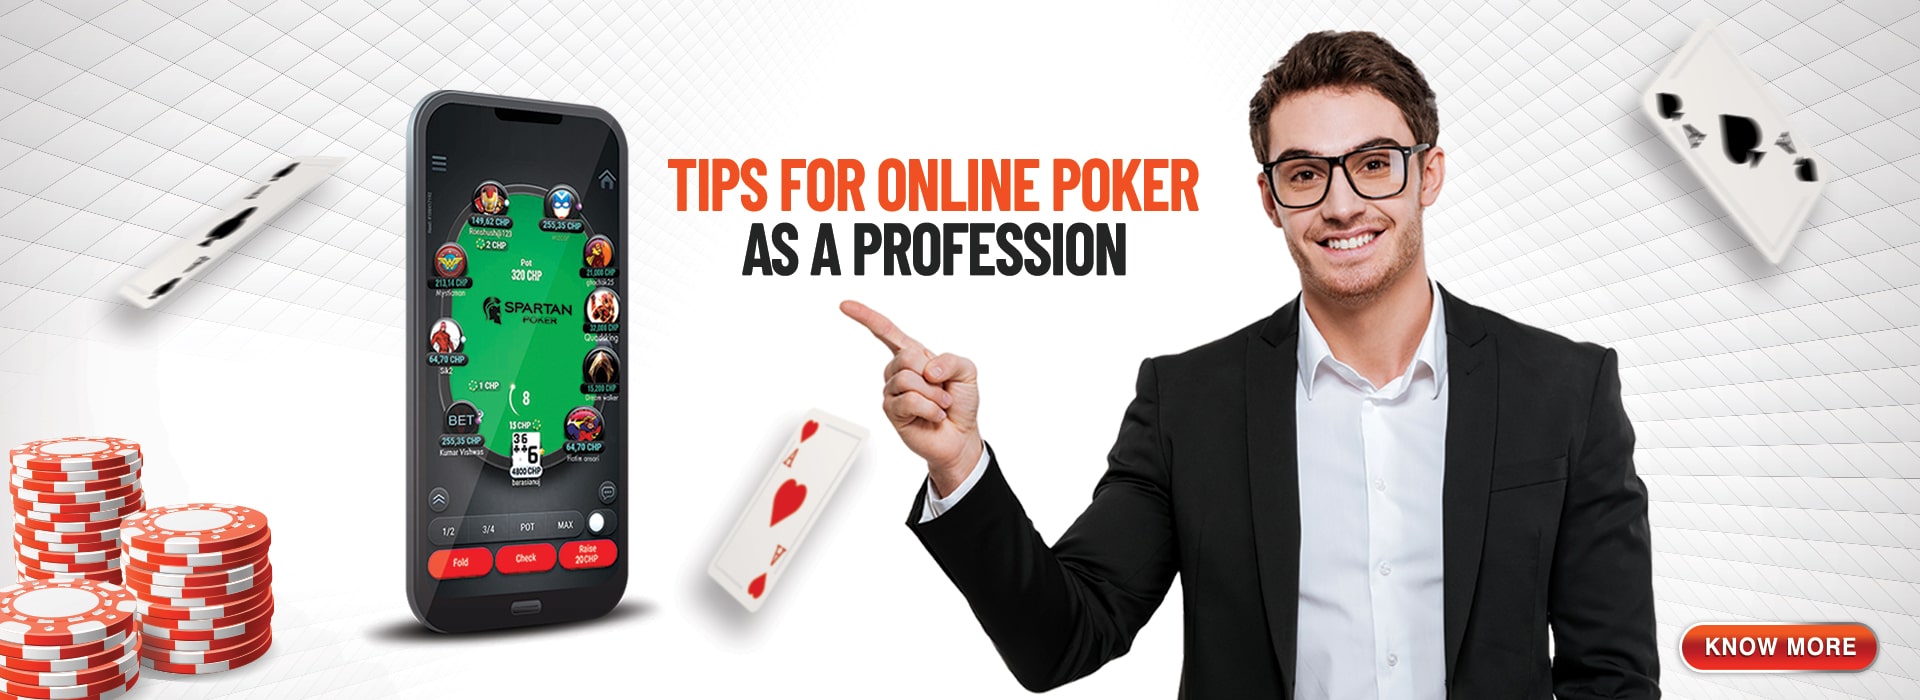 poker as a profession